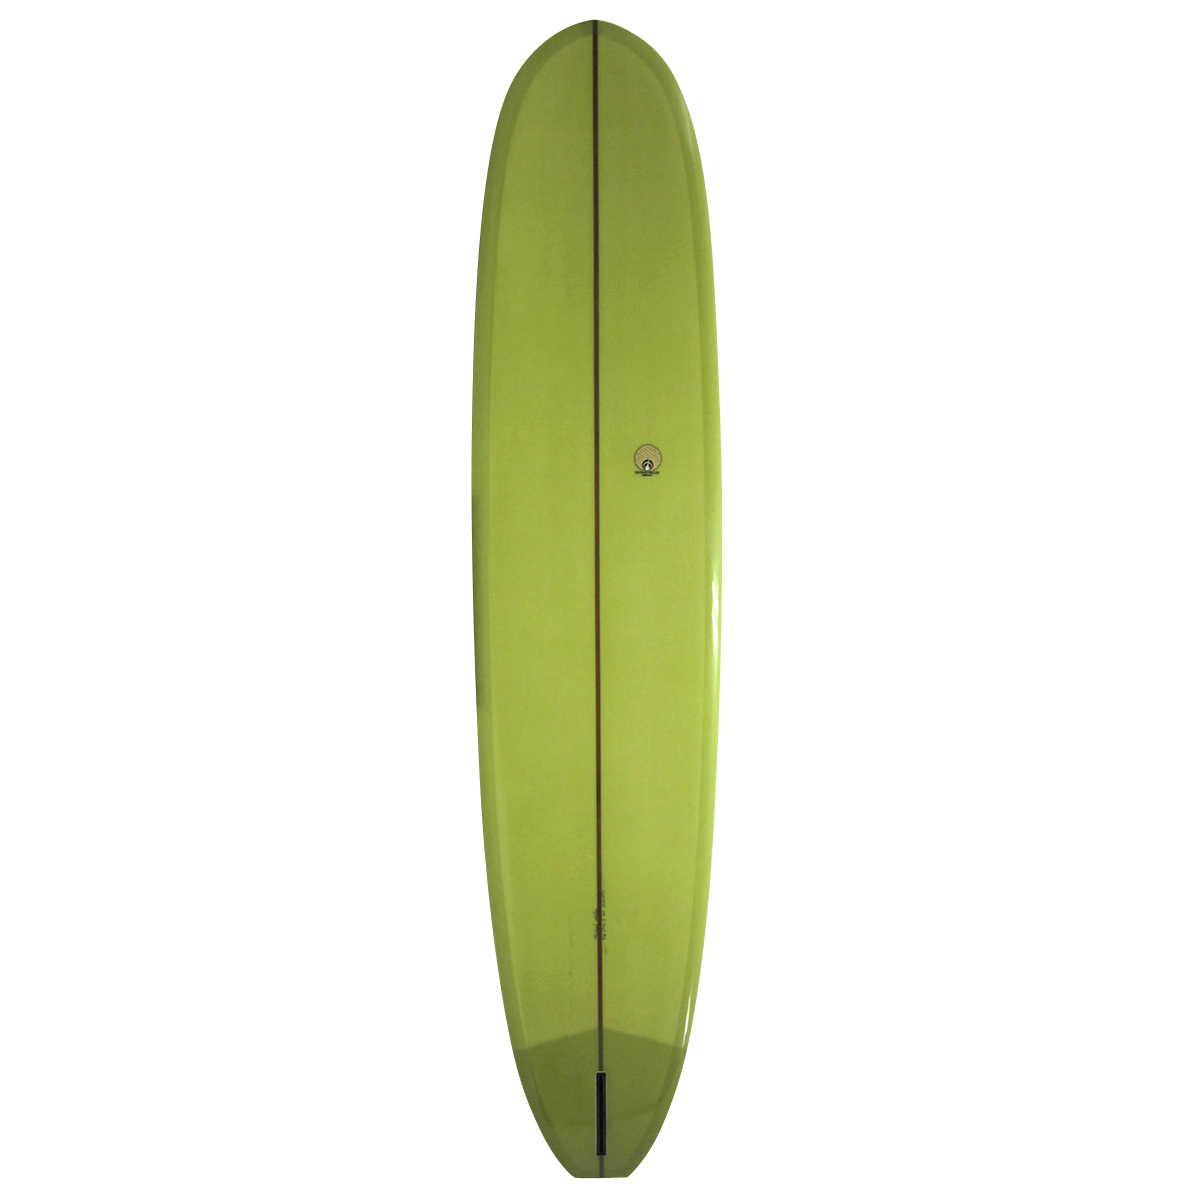 Michael Miller Surfboards / 9`6 Traditional Noserider